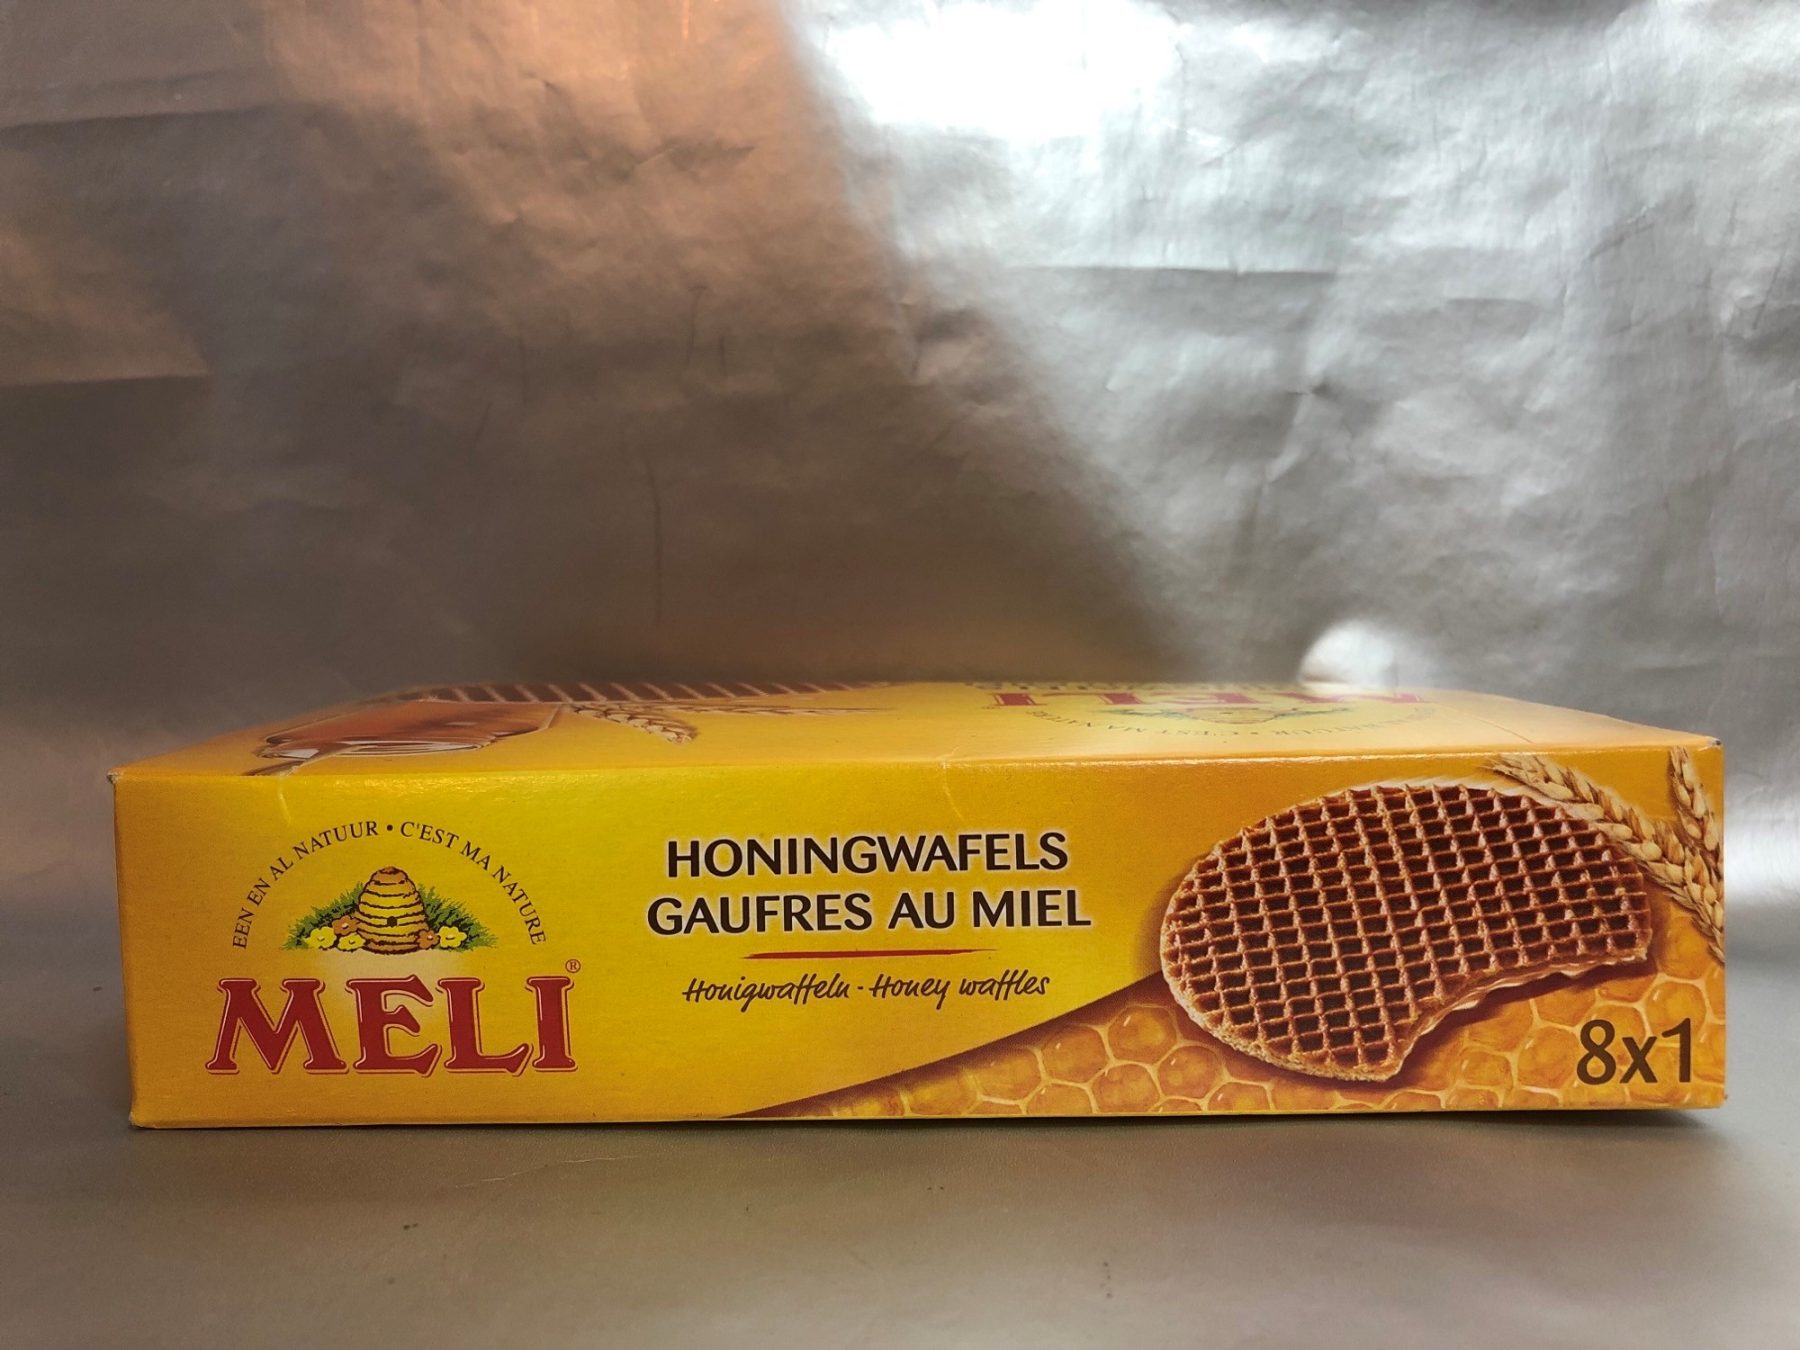 Meli 'honey-waffles'